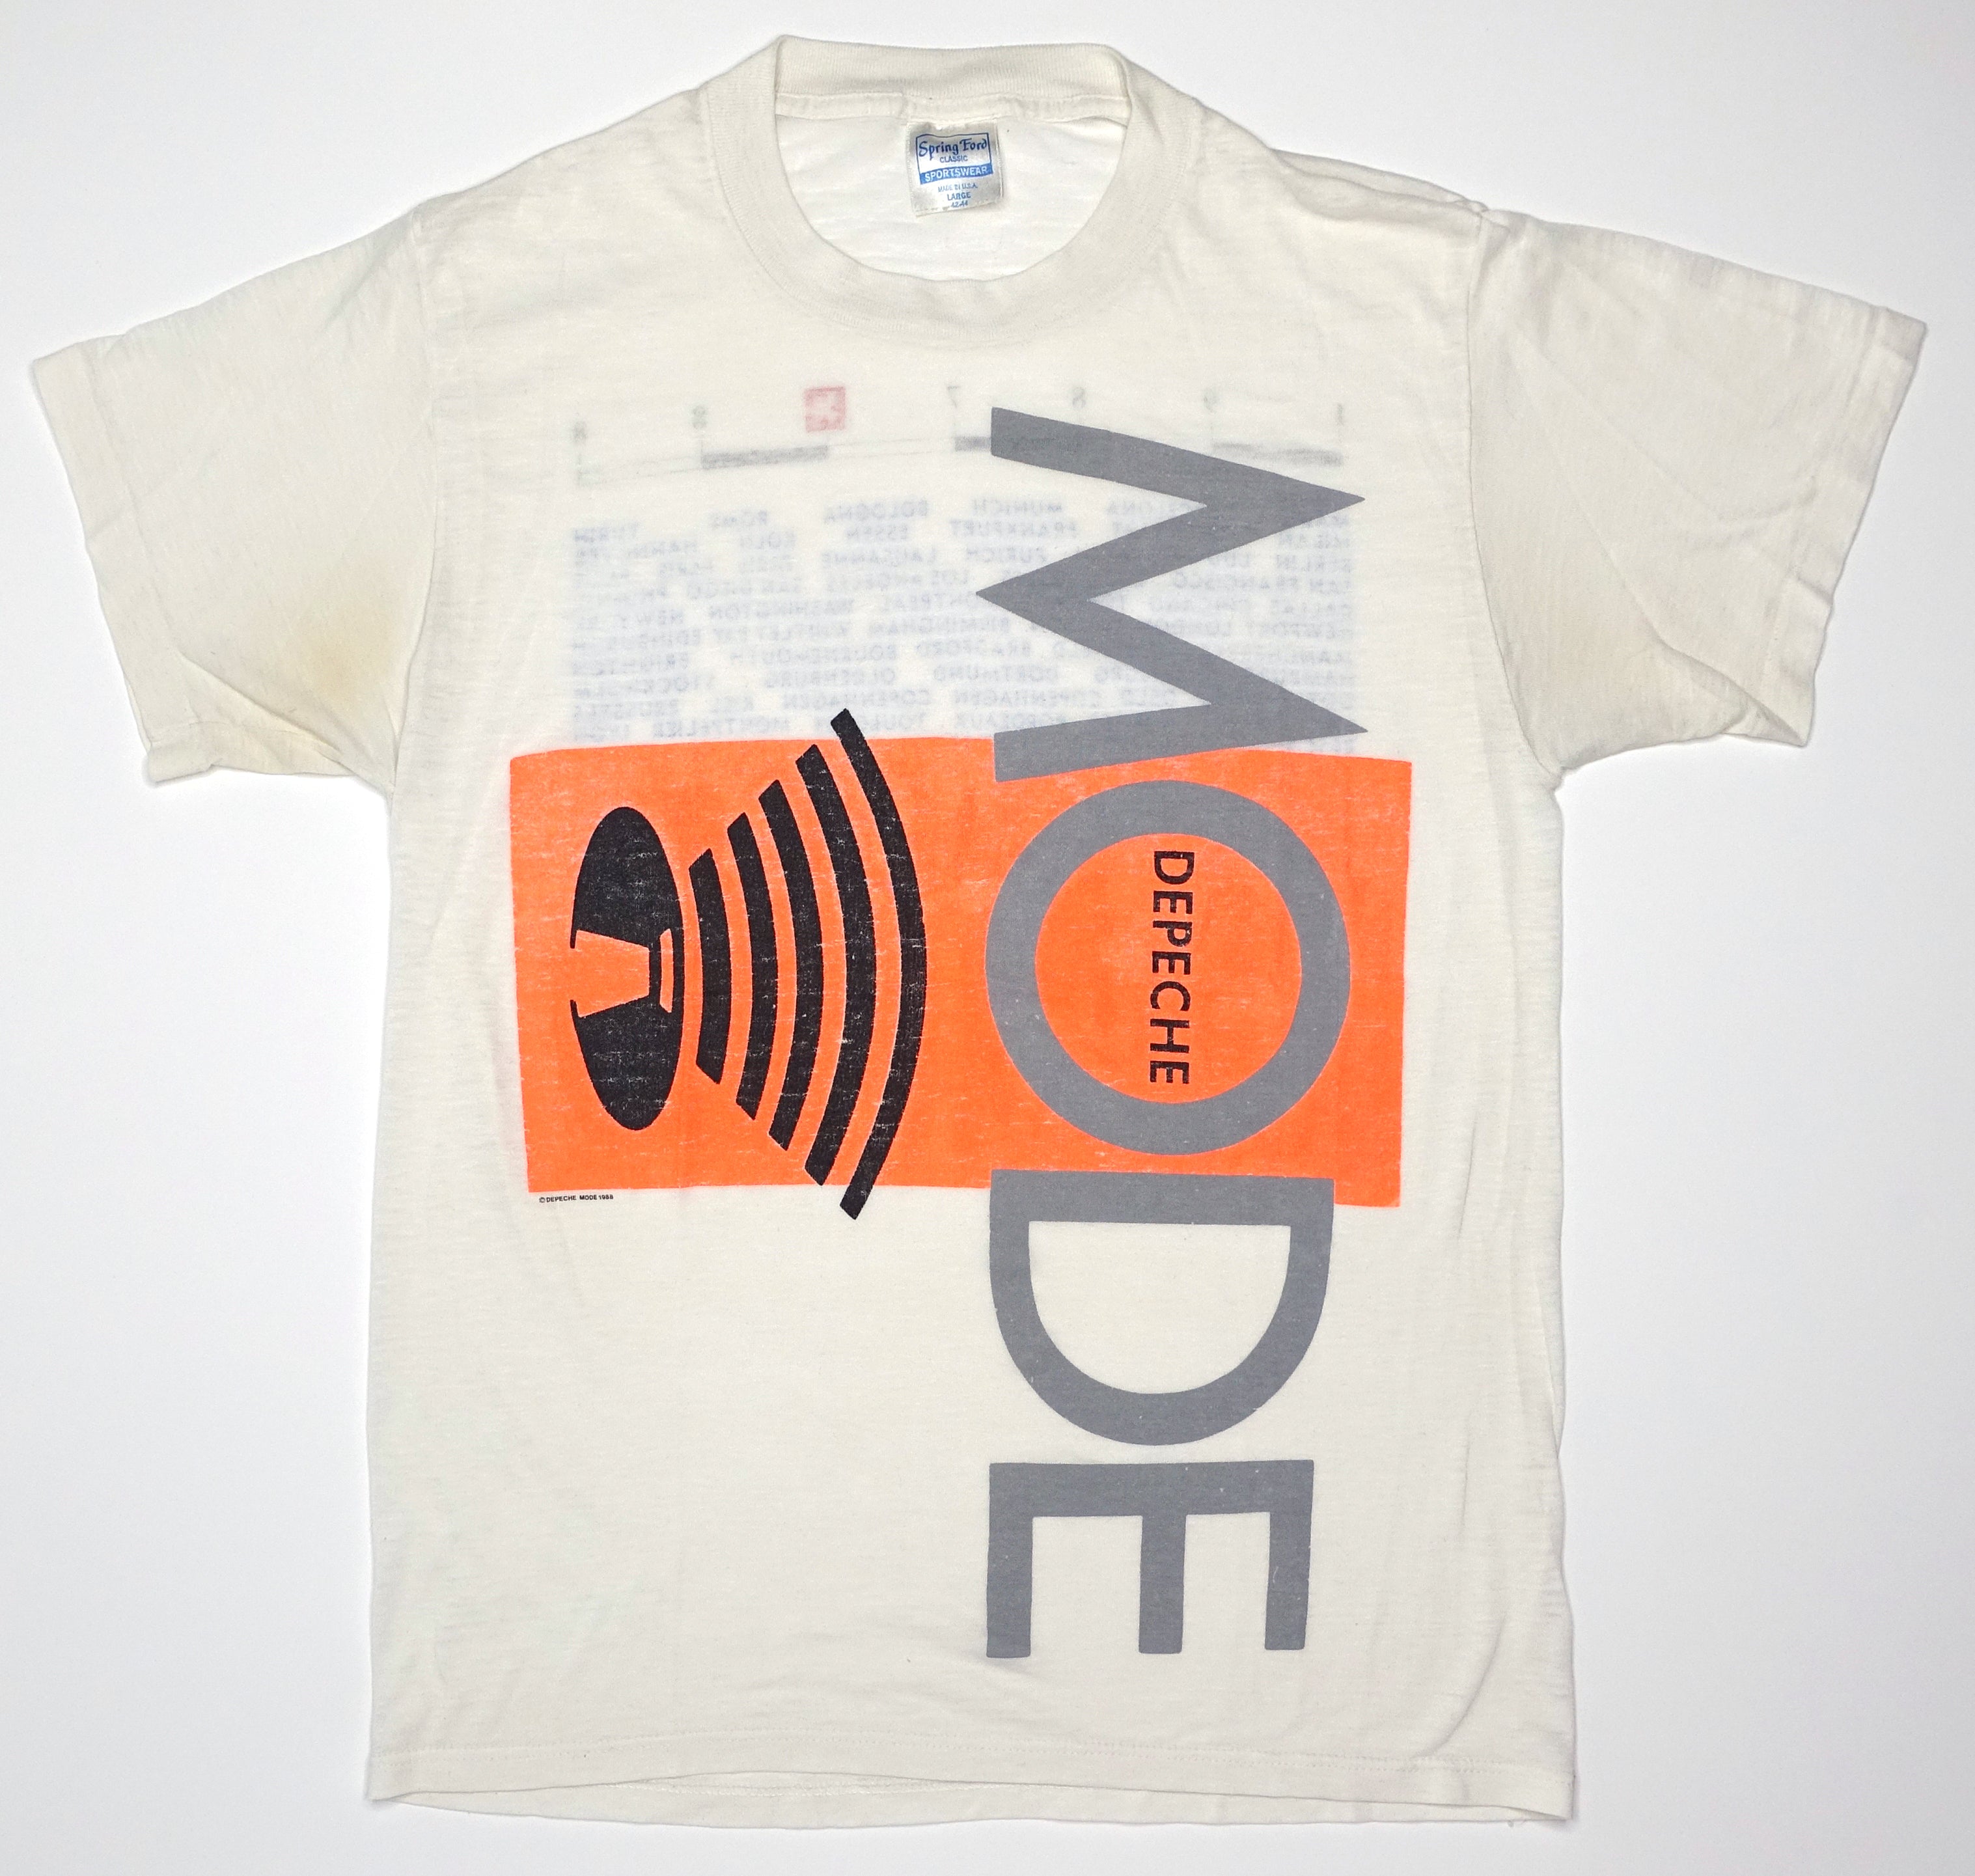 Depeche Mode – Music For The Masses 1987-1988 World Tour Shirt Size Large